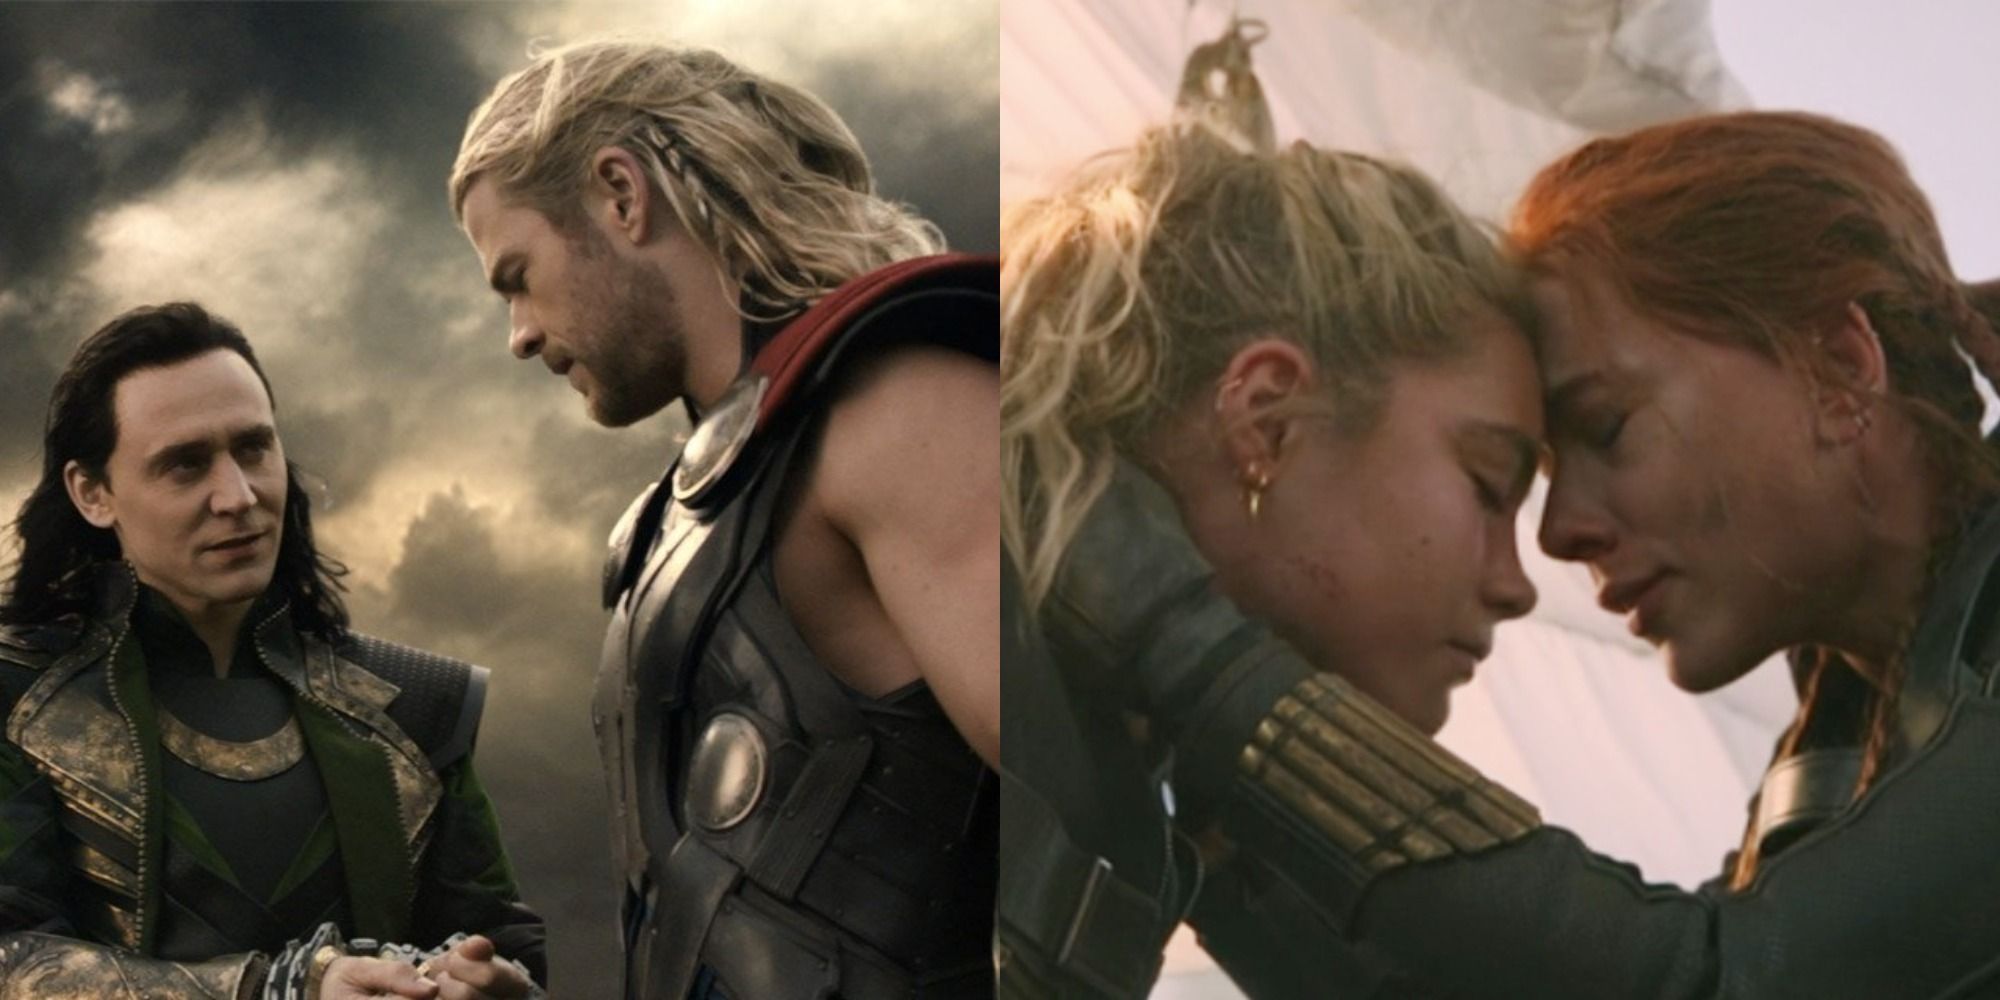 Thor and Loki in Thor: The Dark World and Natasha and Yelena in Black Widow